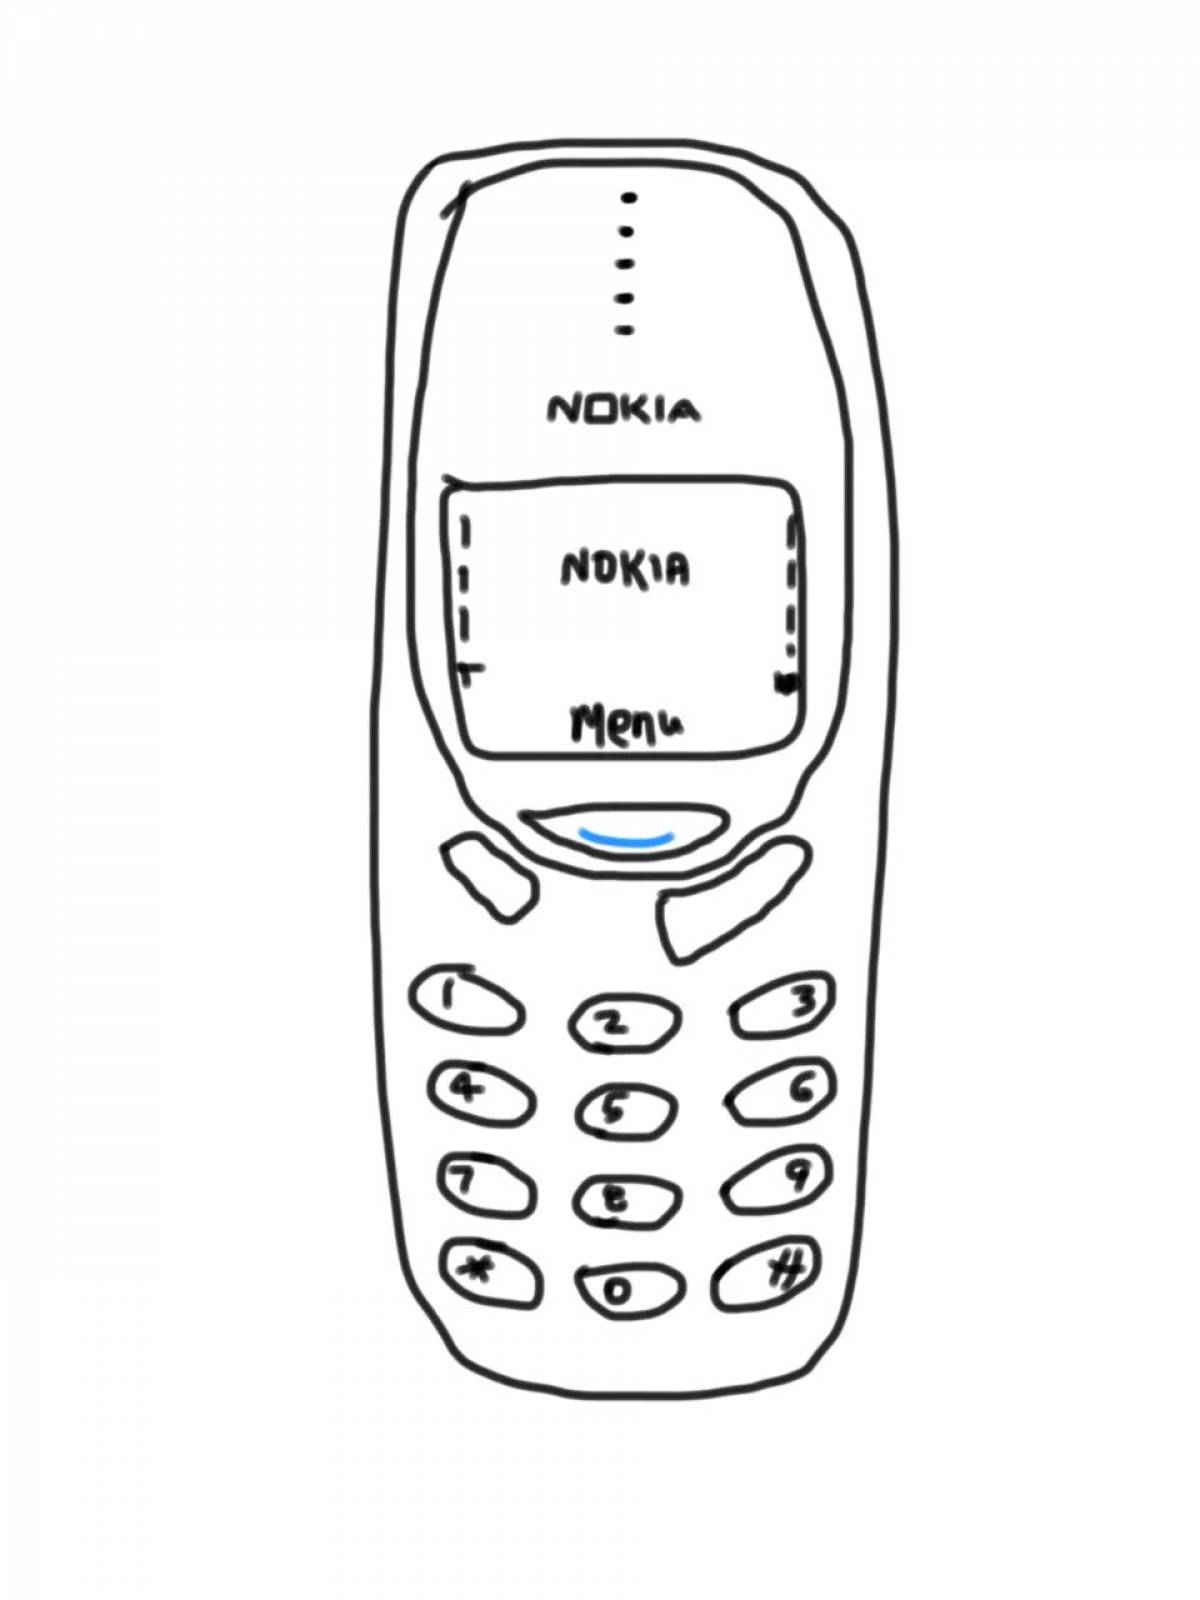 Nokia 3310 Blueprint